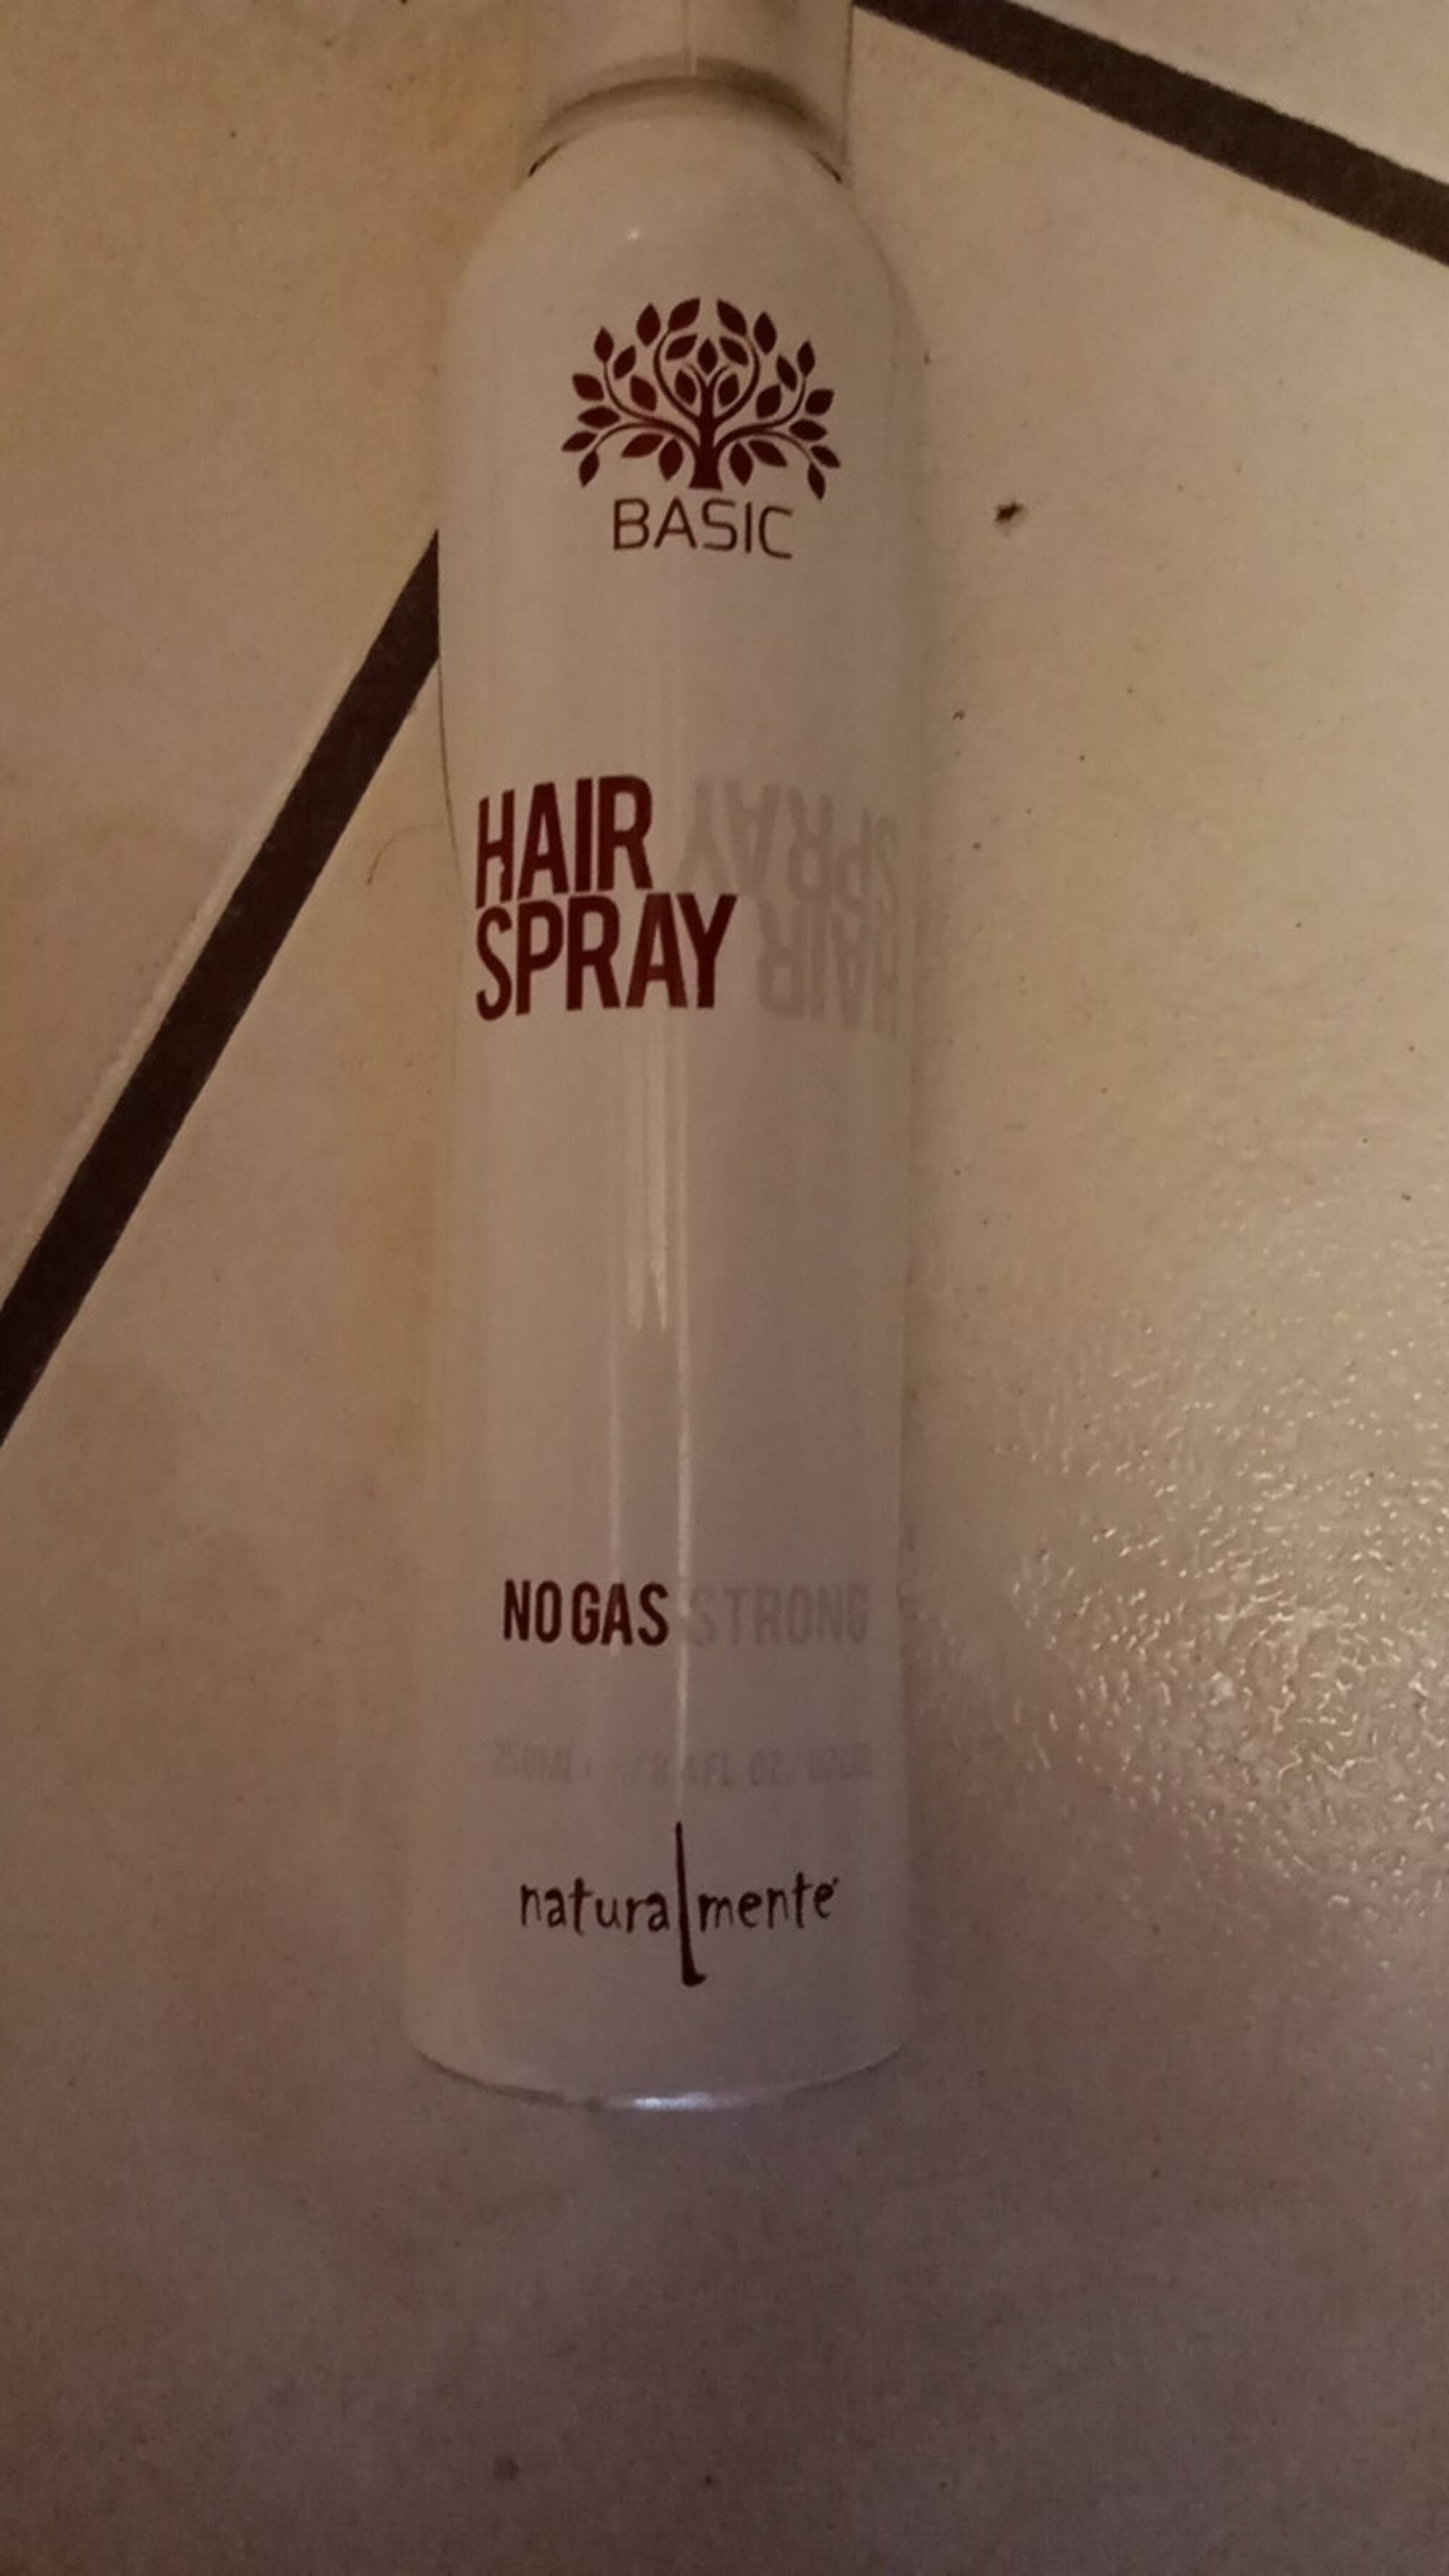 NATURALMENTE - Basic - Hairspray strong